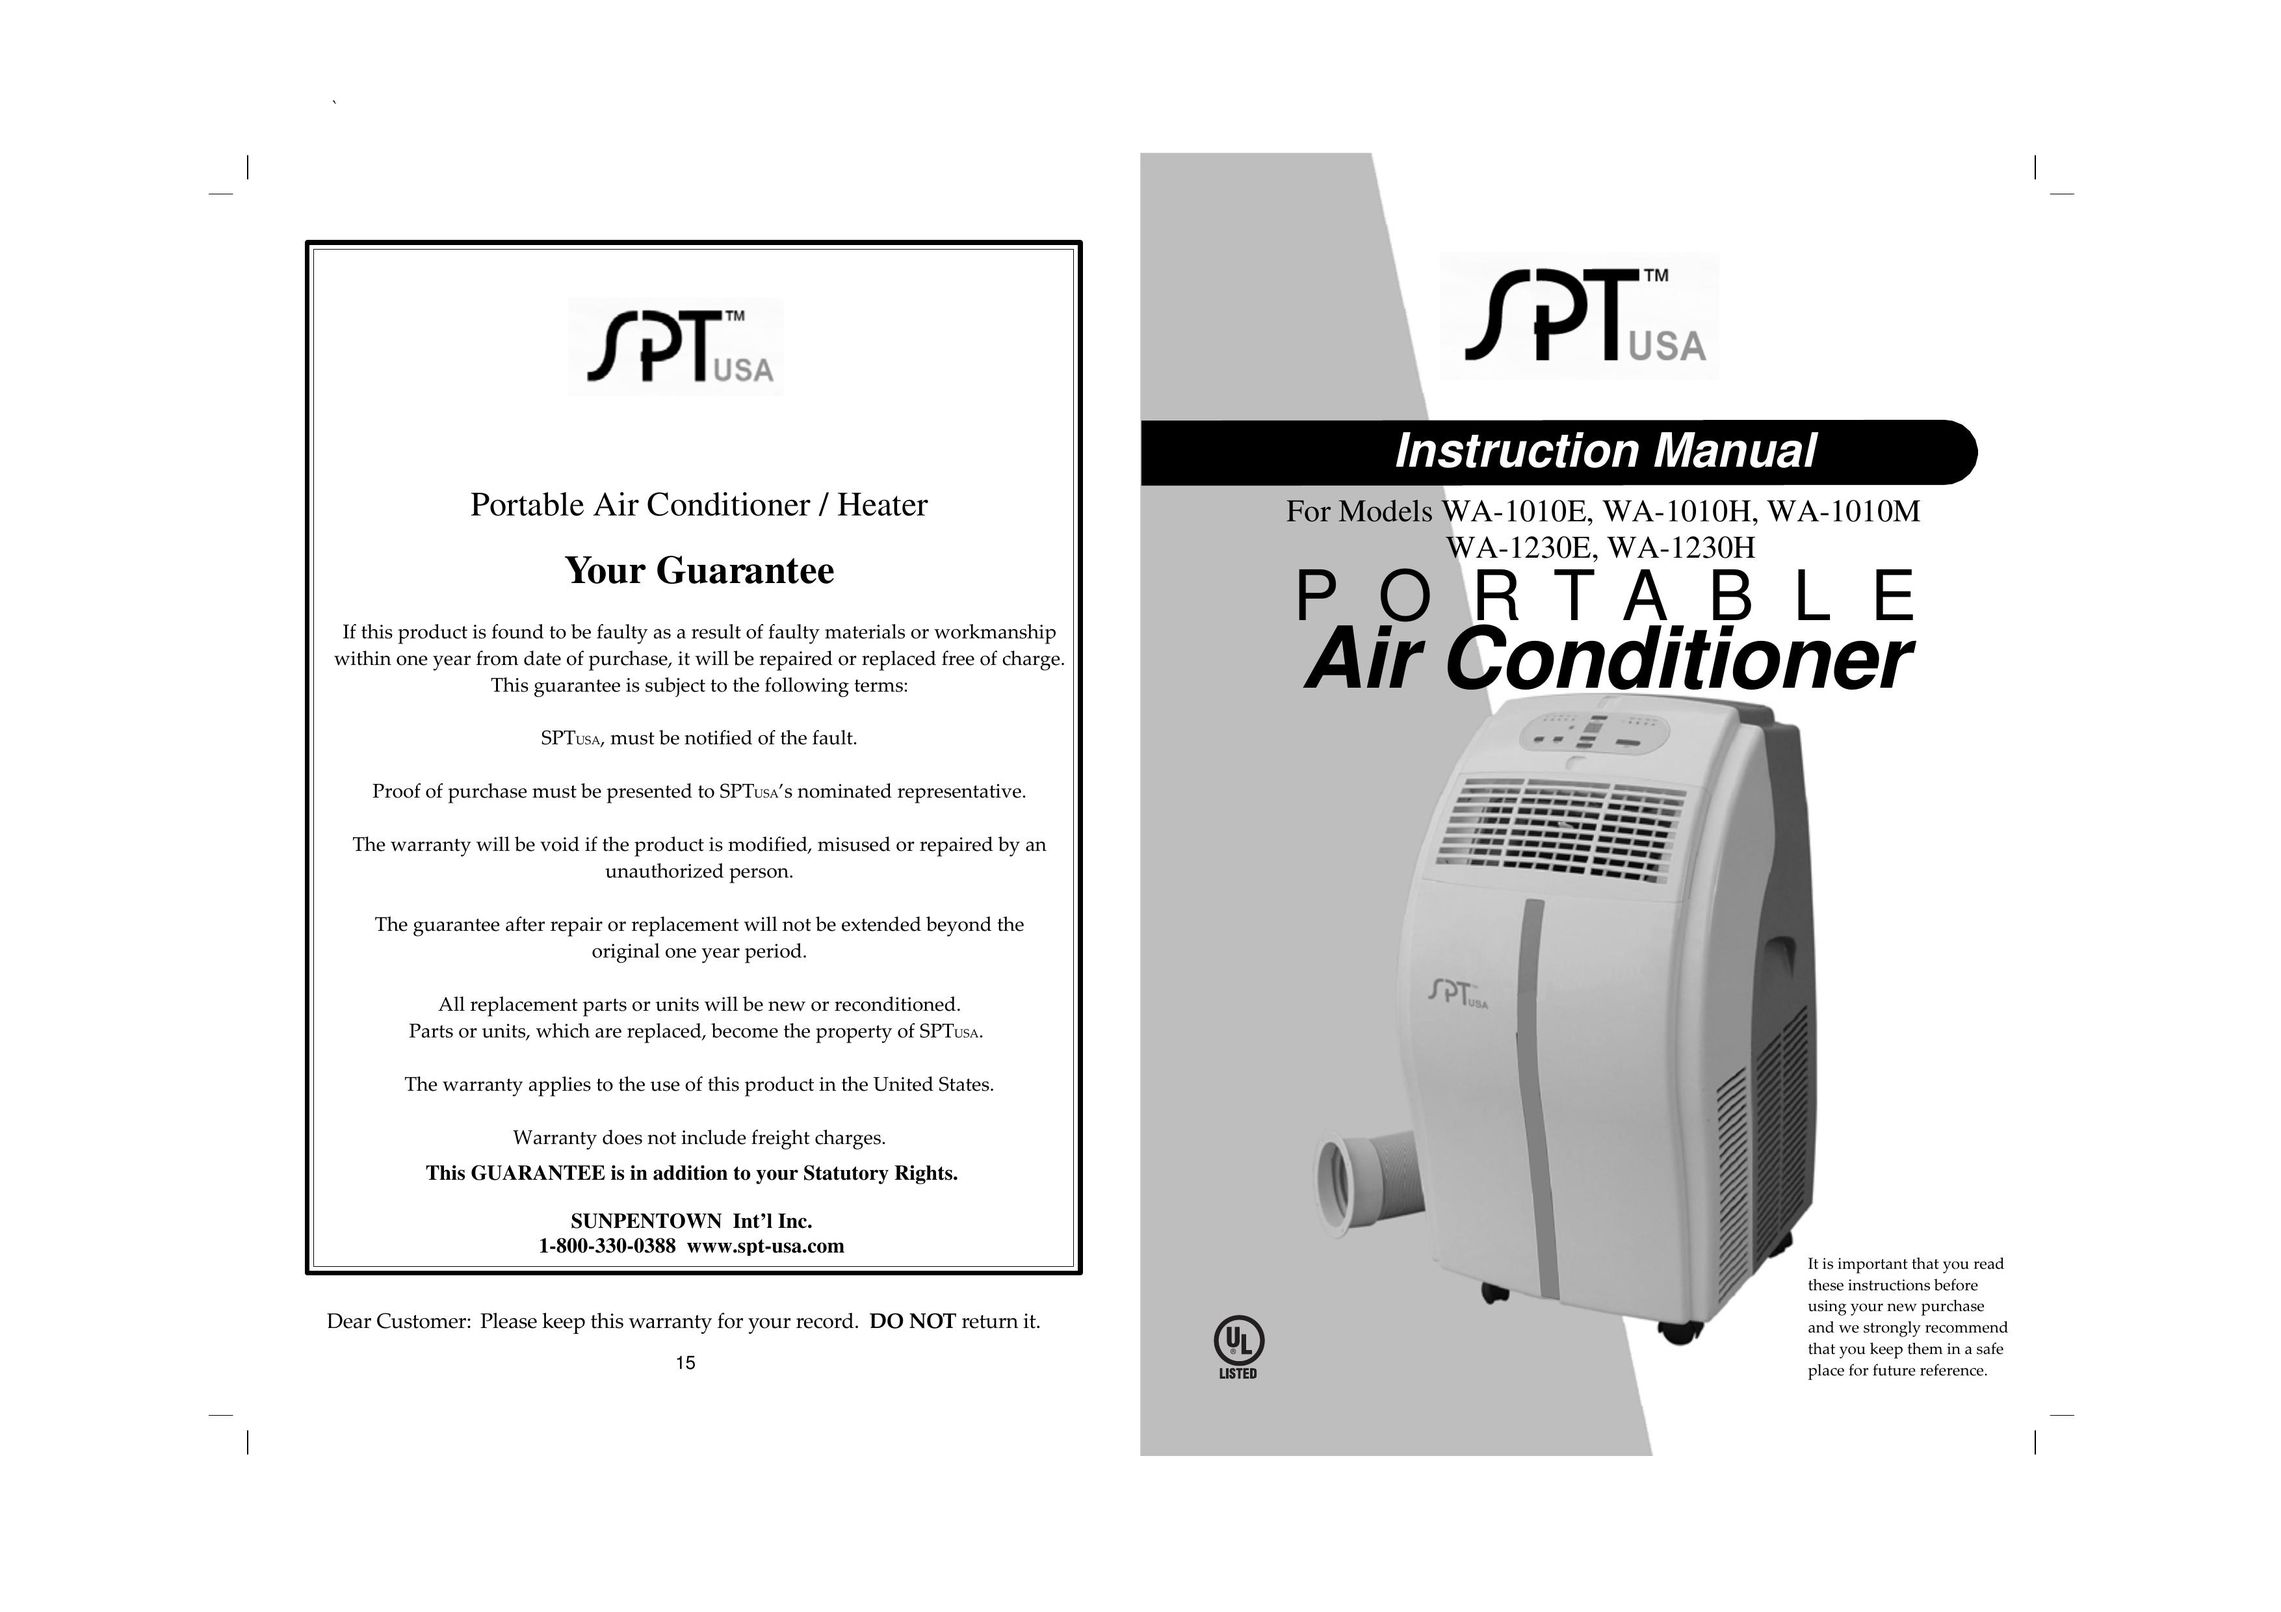 Sunpentown Intl WA-1230E Air Conditioner User Manual